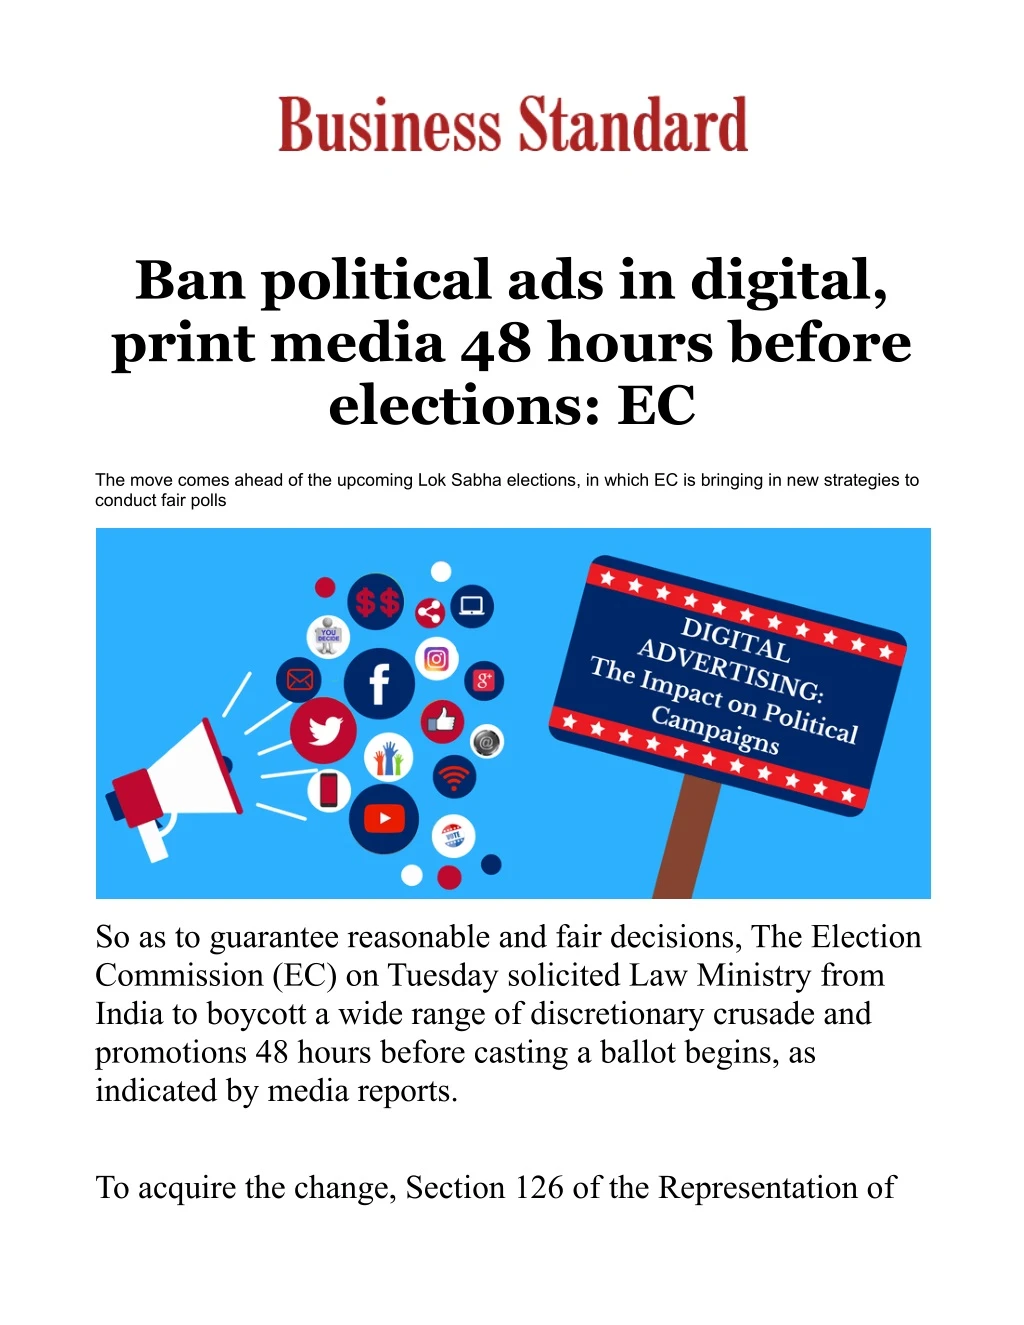 ban political ads in digital print media 48 hours